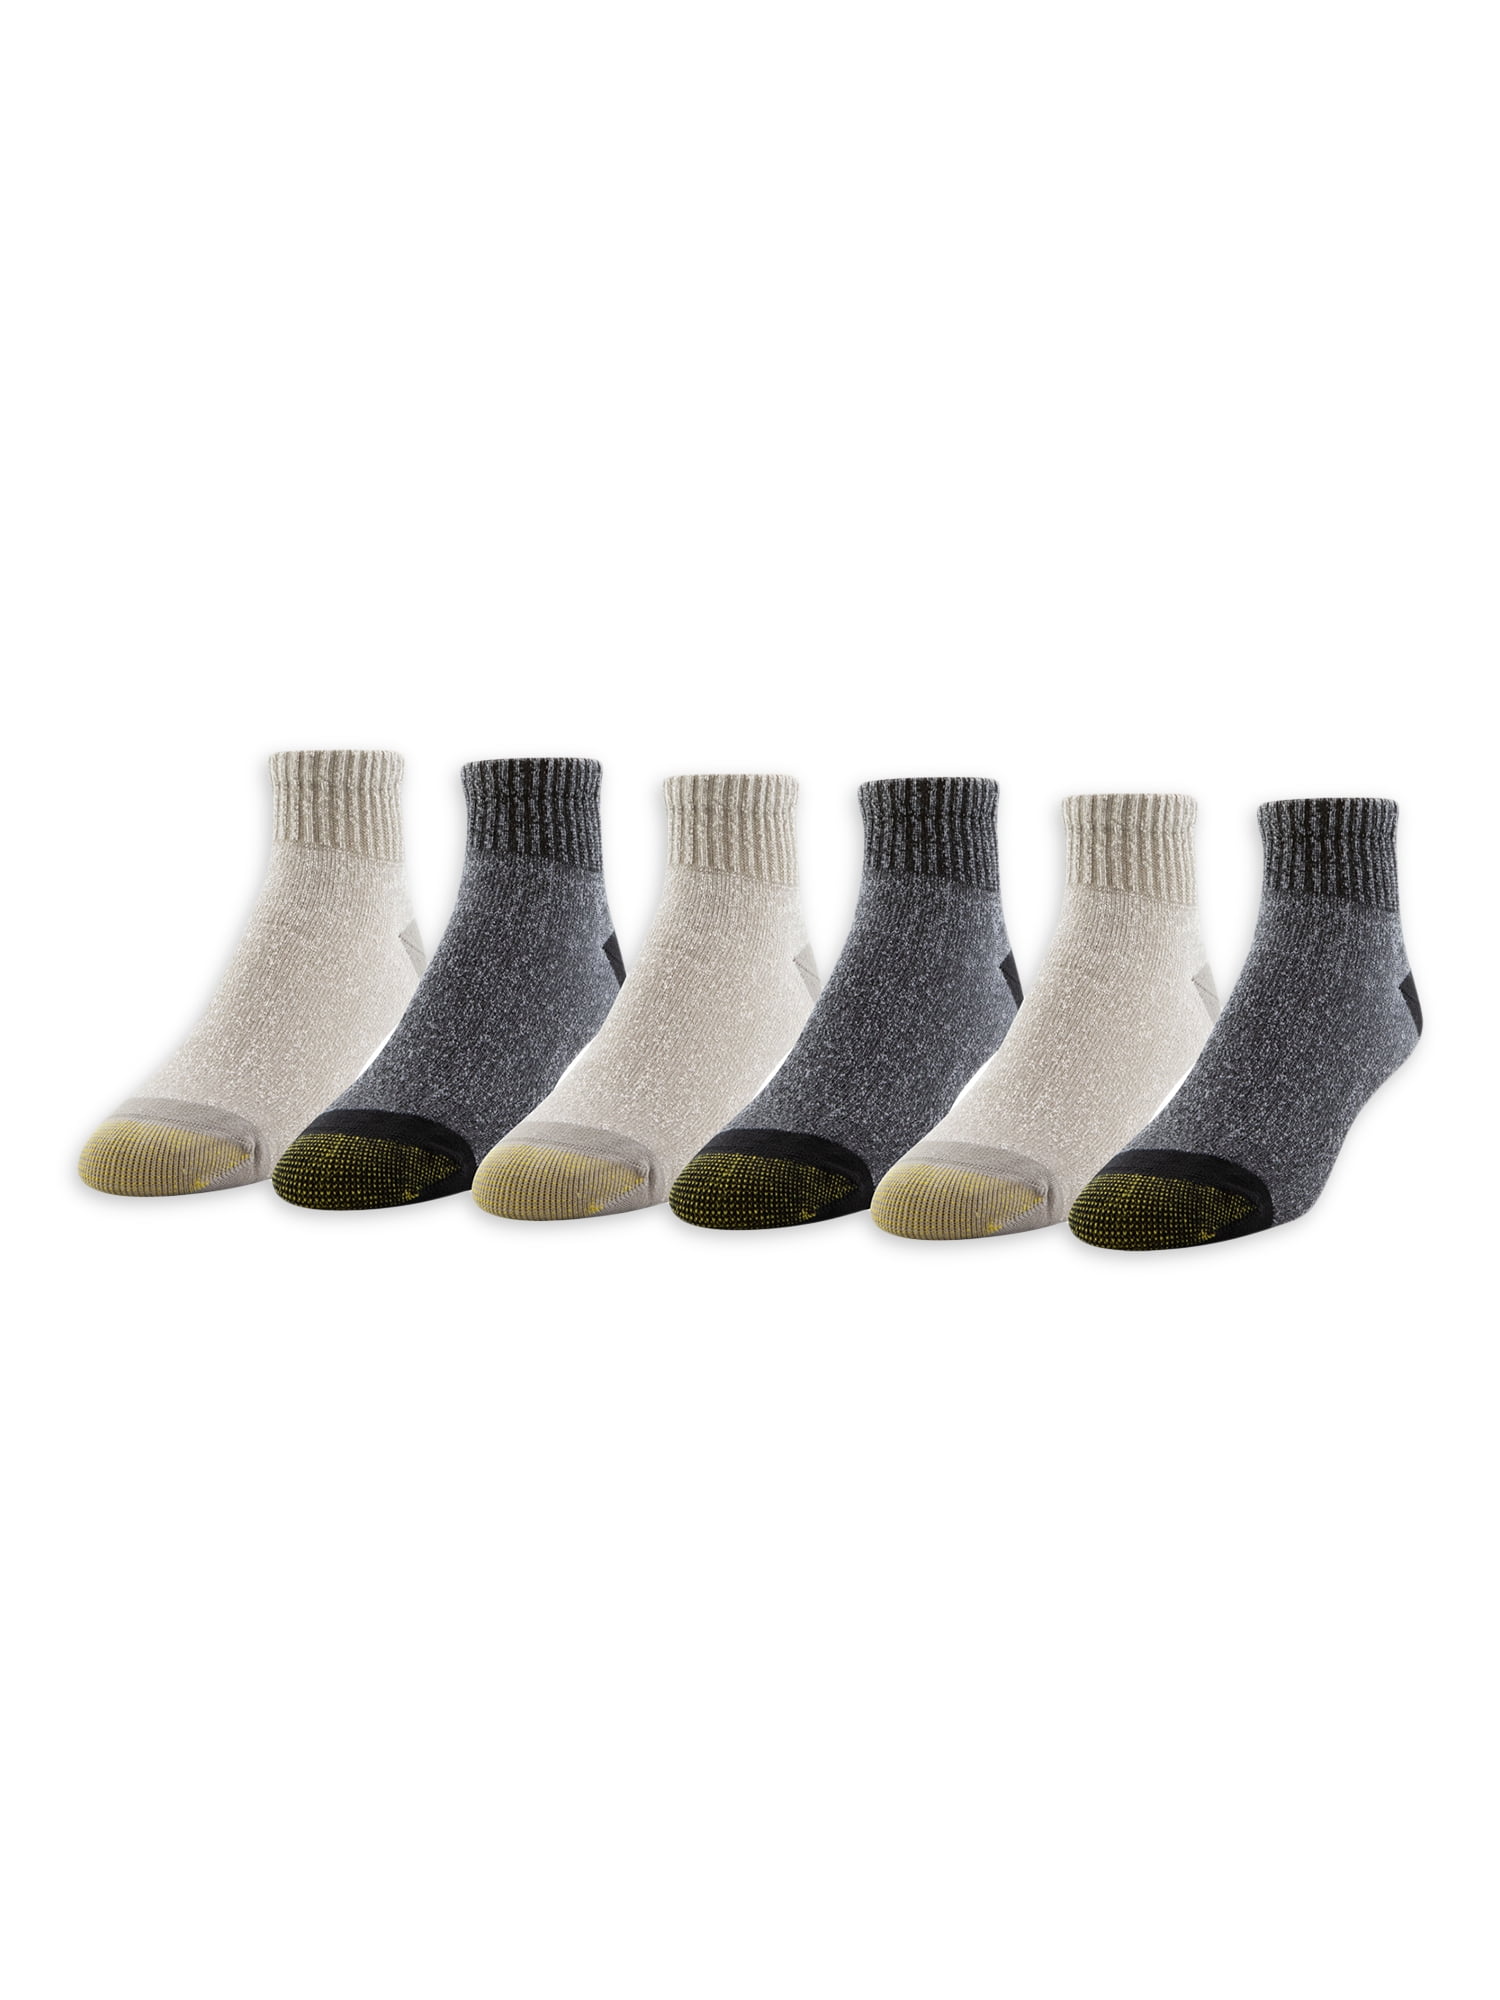 GOLDTOE Edition Men's Hiker Cushion Quarter Socks, 6-Pack